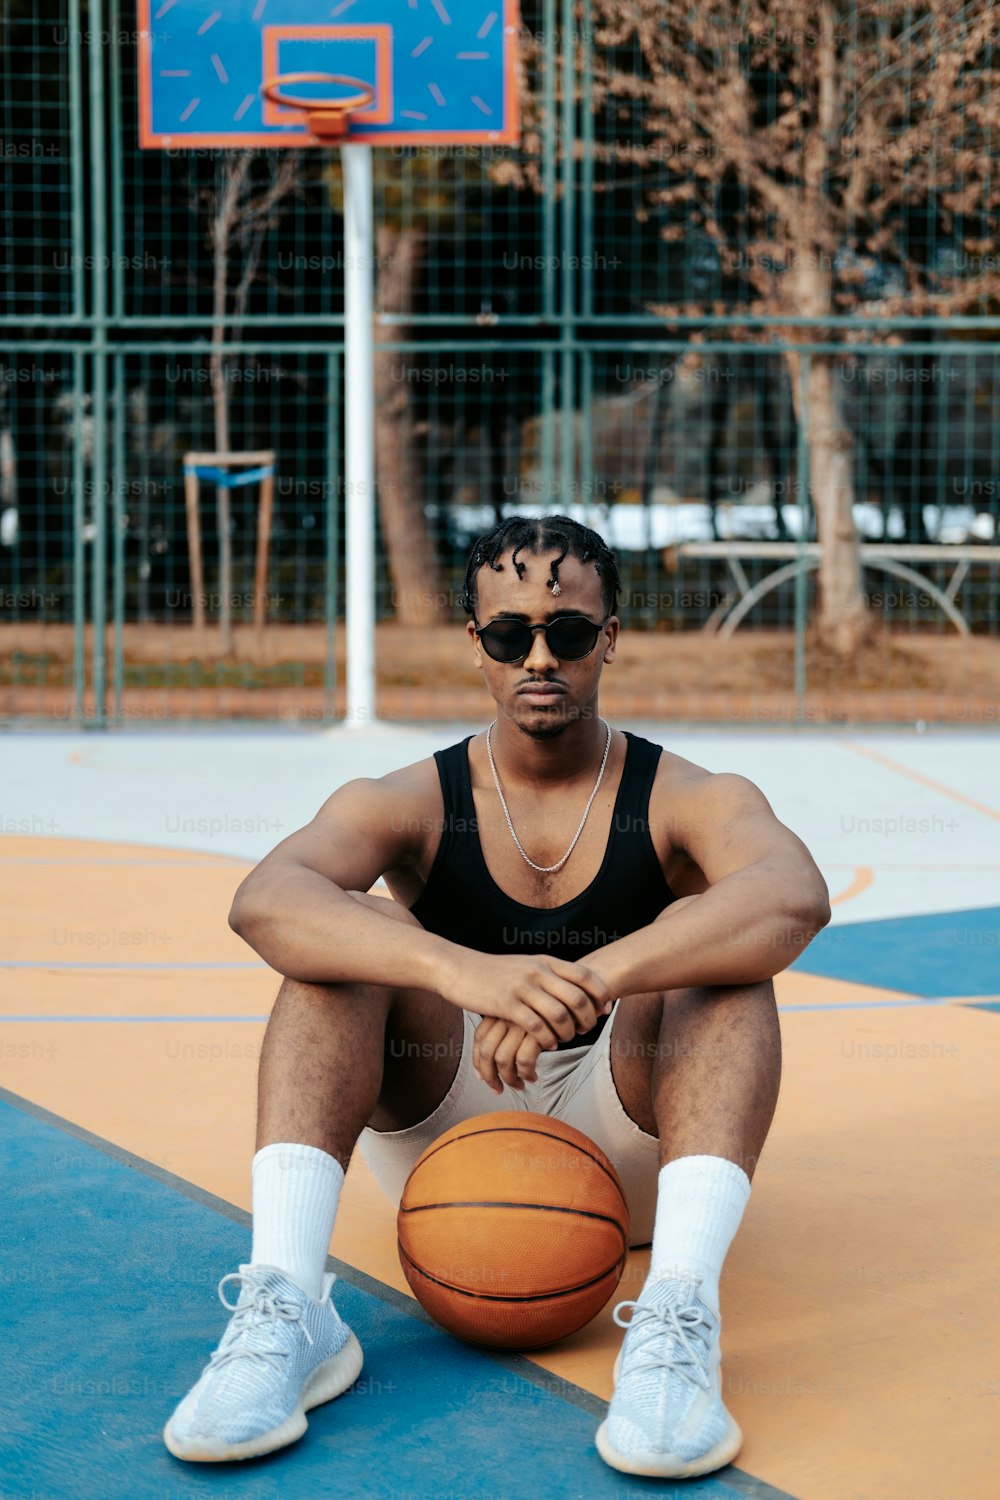 Un homme assis sur un terrain de basket-ball tenant un ballon de basket